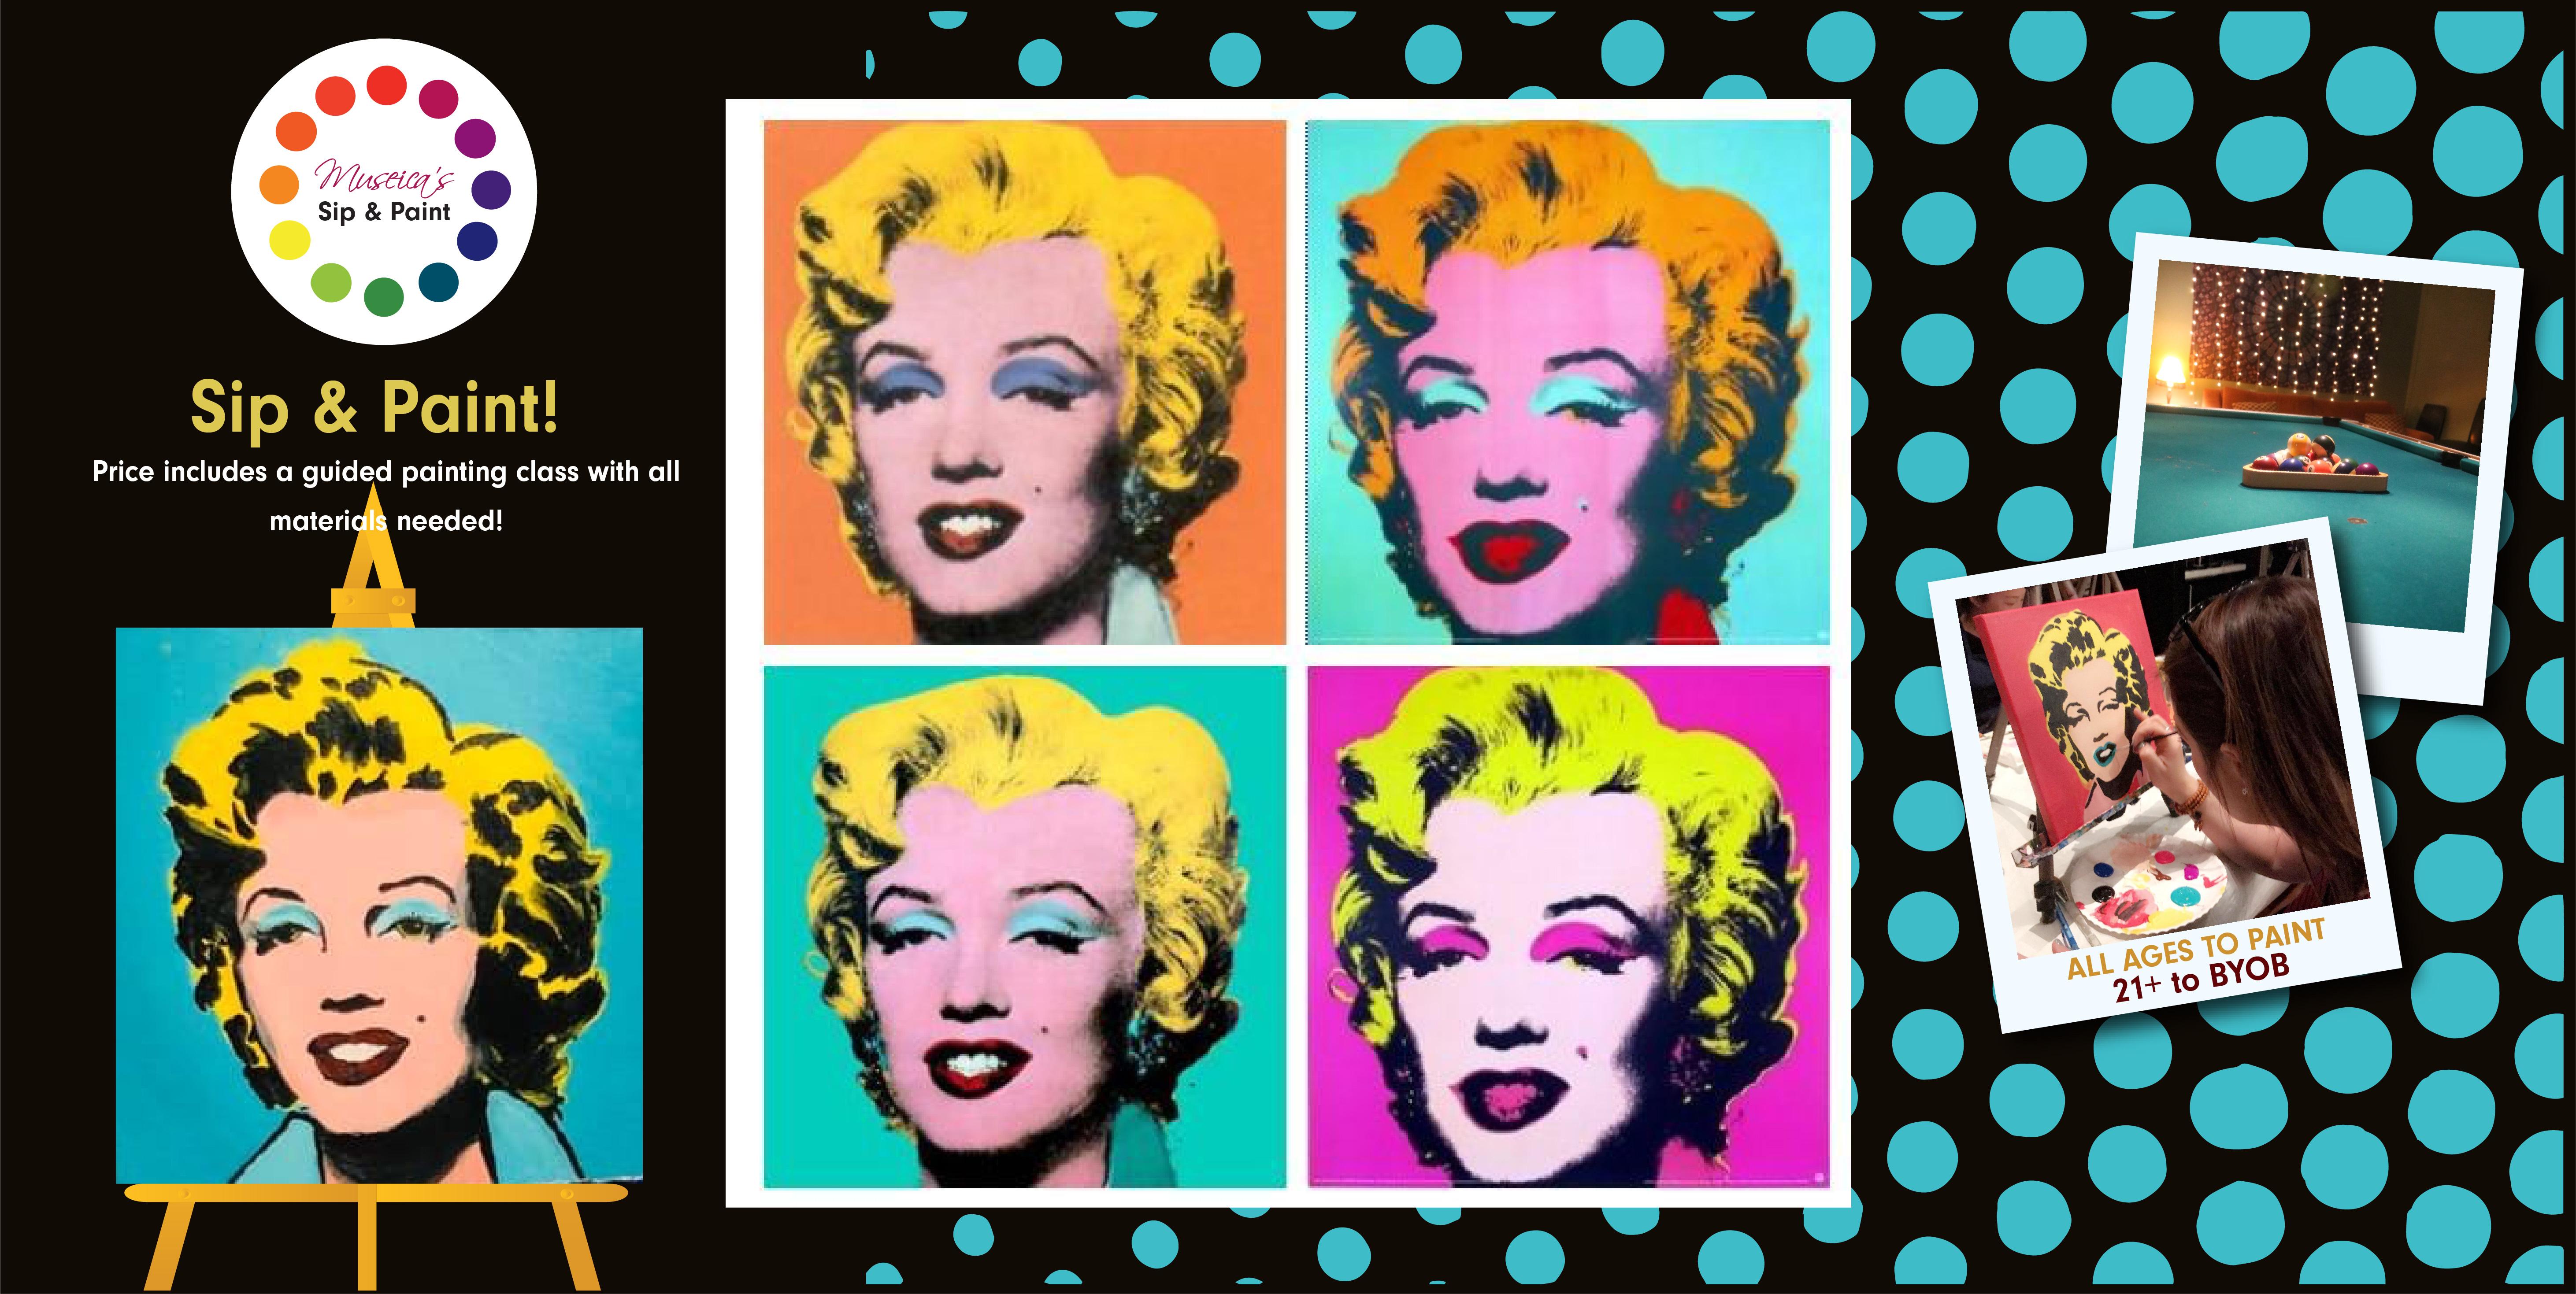 Museica's BYOB Sip & Paint Night - Marilyn Monroe Pop Art! 